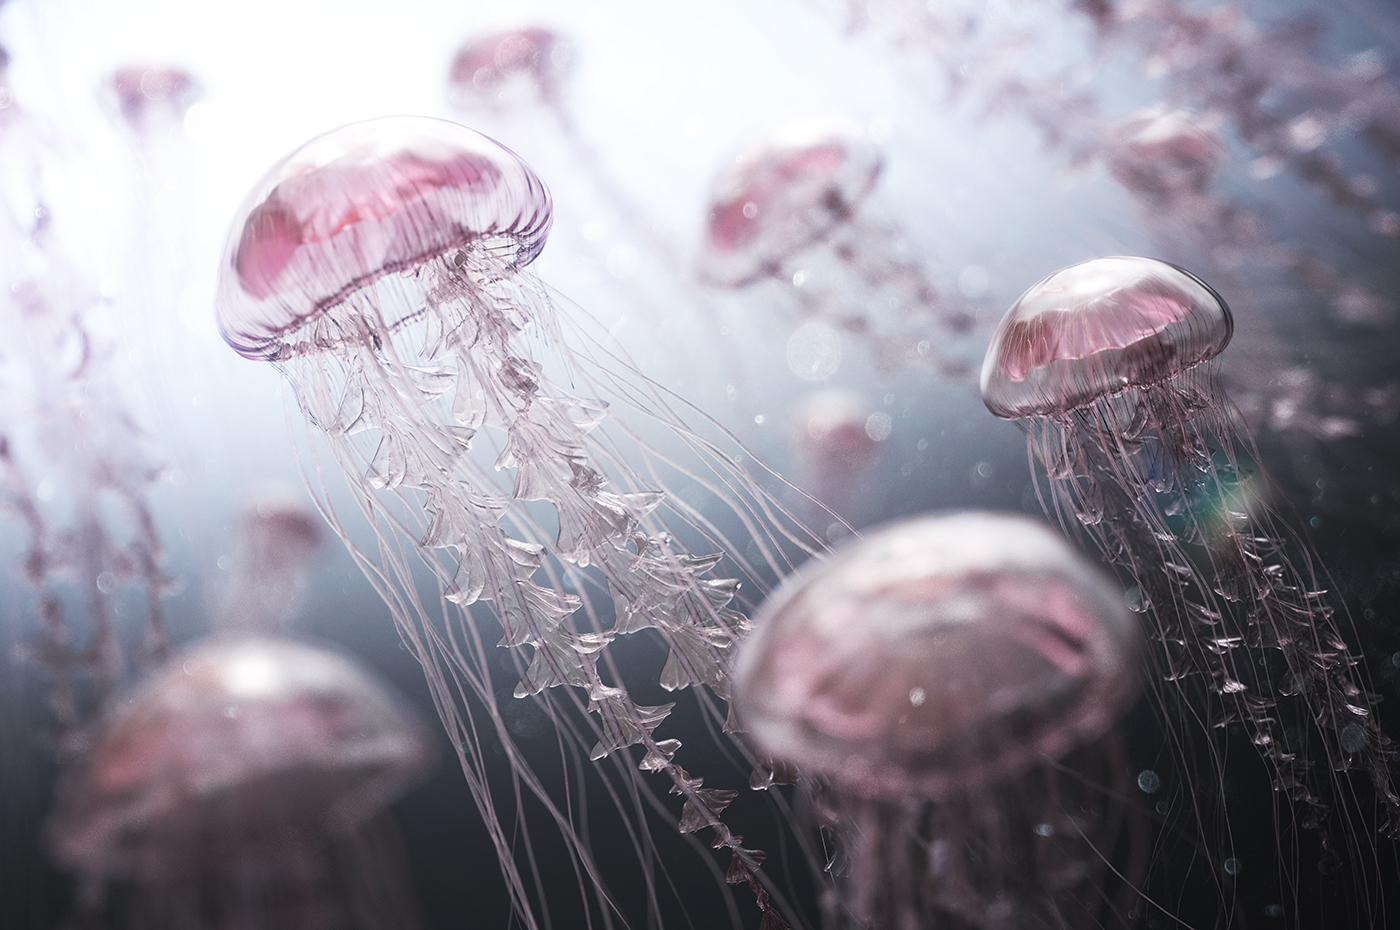 Jellyfish Swarm